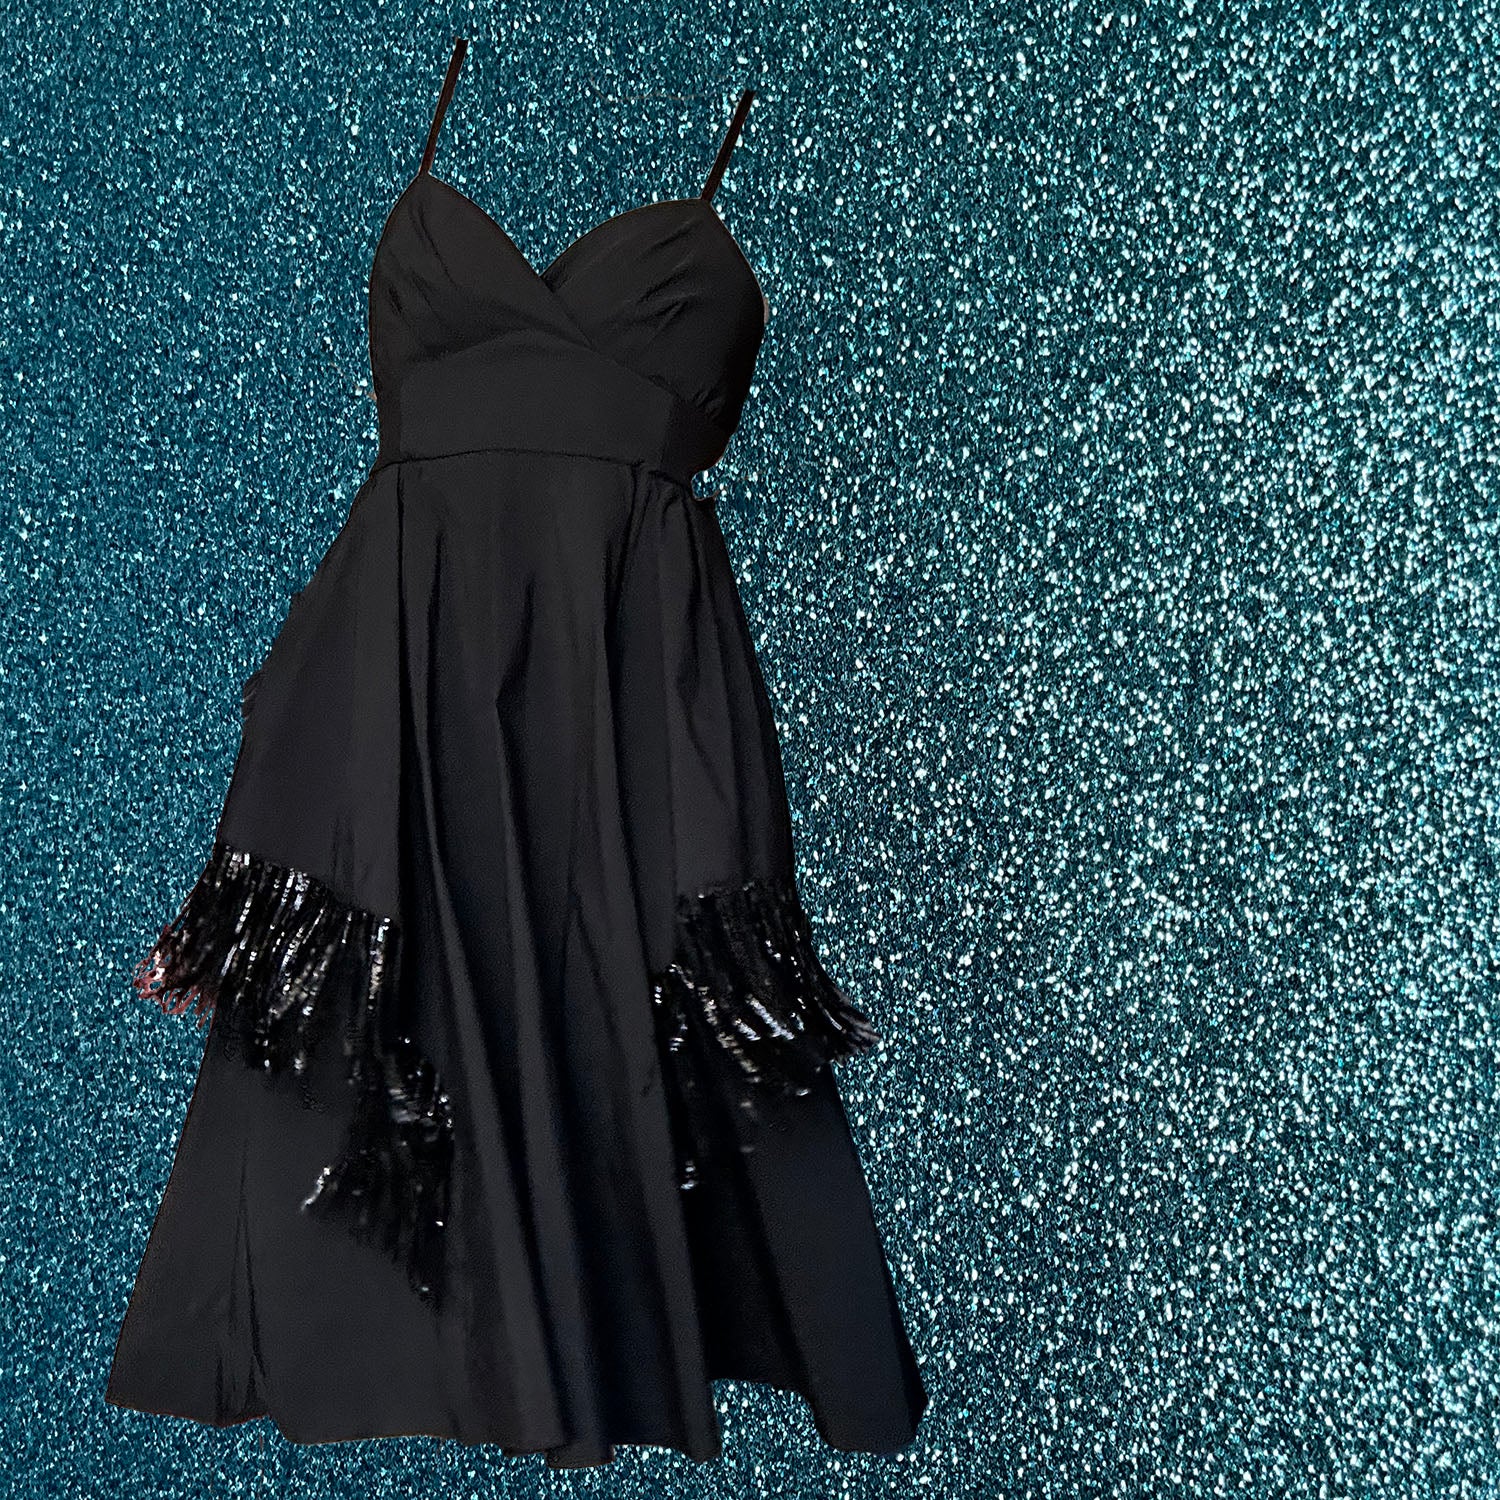 black dress with sequin fringe on sequin background